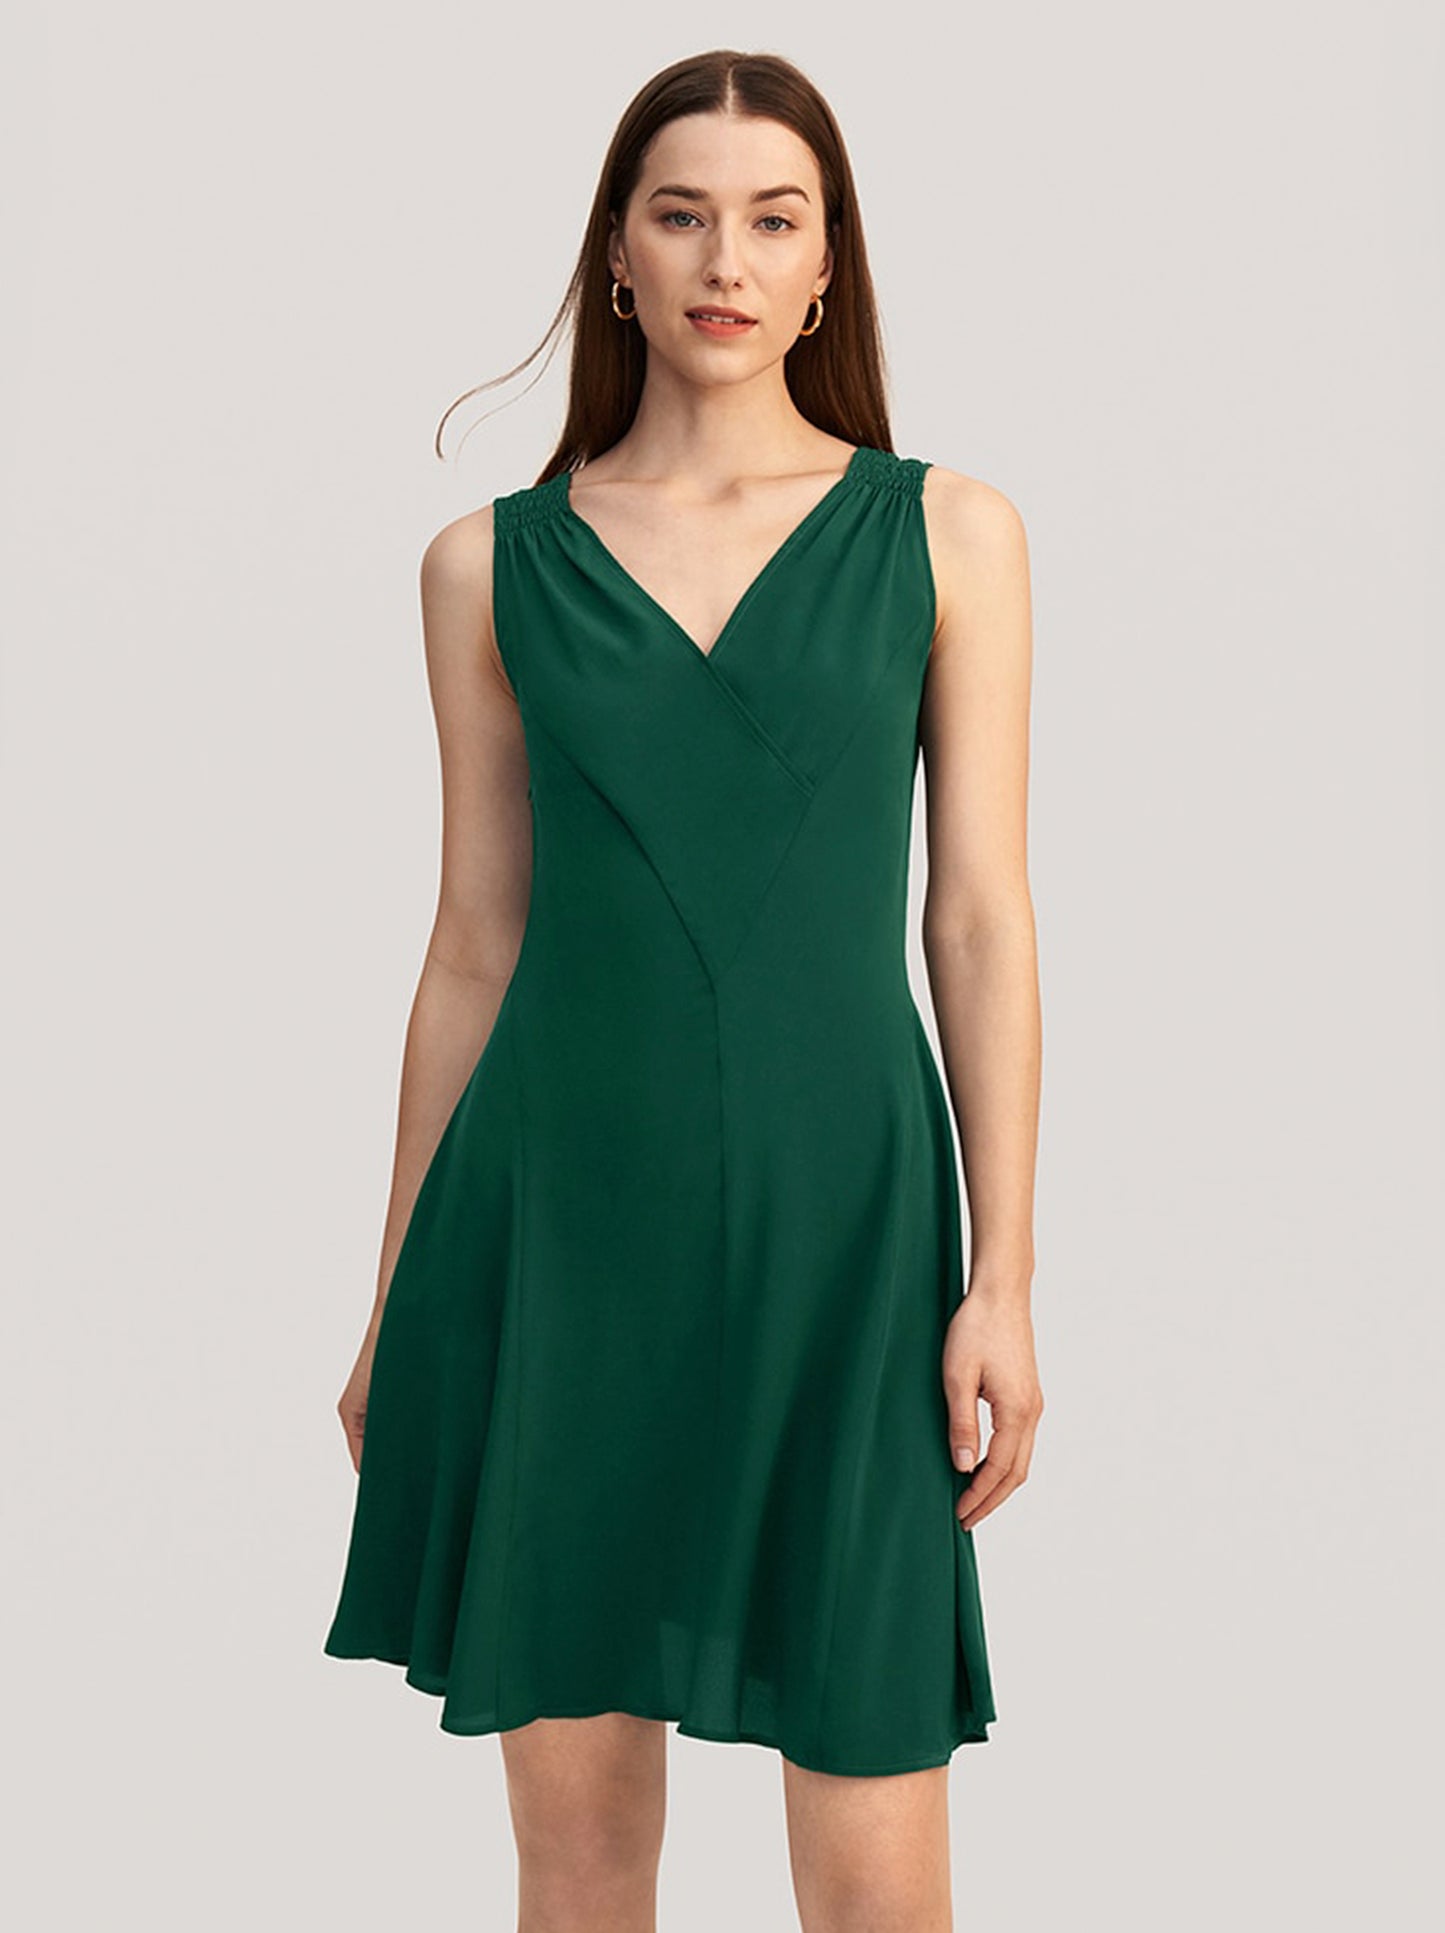 Summer dreams : LILYSILK Lily Dress (100% Silk)